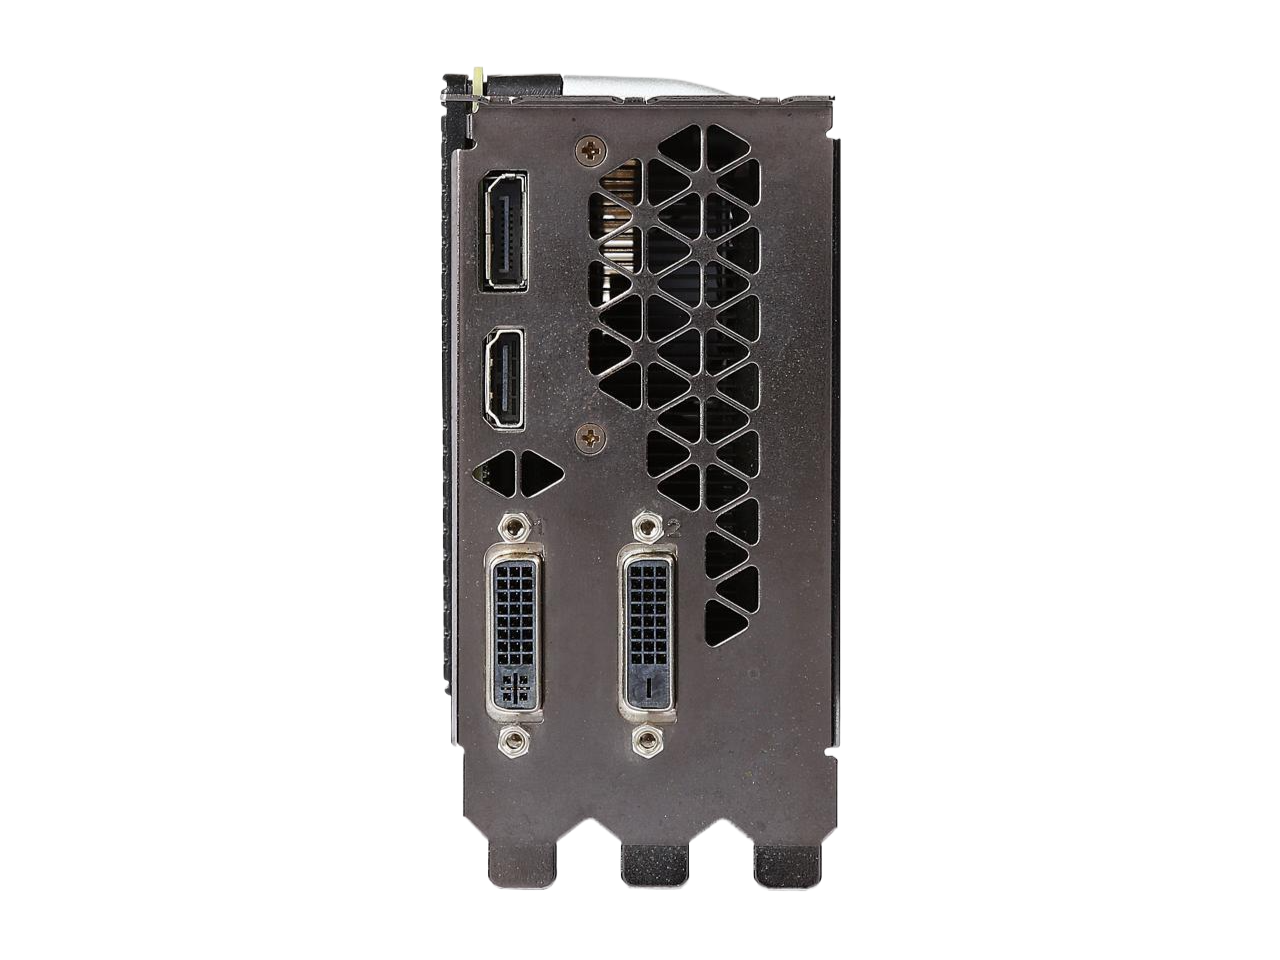 ASUS GeForce GTX TITAN Z 12GB 768-Bit GDDR5 G-SYNC Support PCI Express 3.0 HDCP Ready SLI Support Video Card GTXTITANZ-12GD5